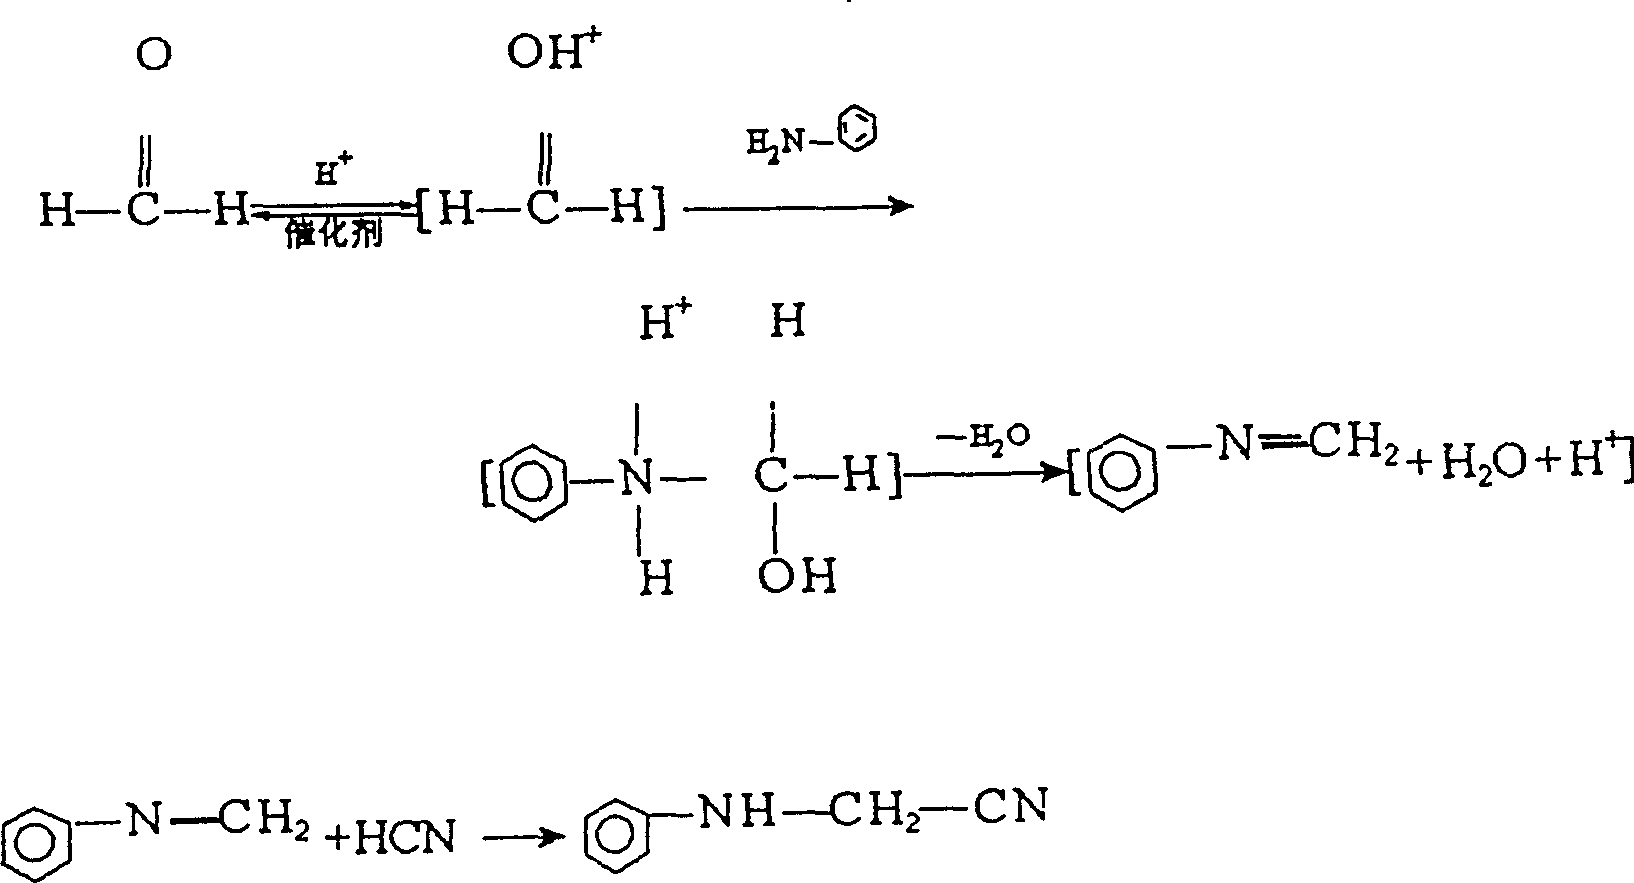 Process for preparing N-phenylamino acetonitrile